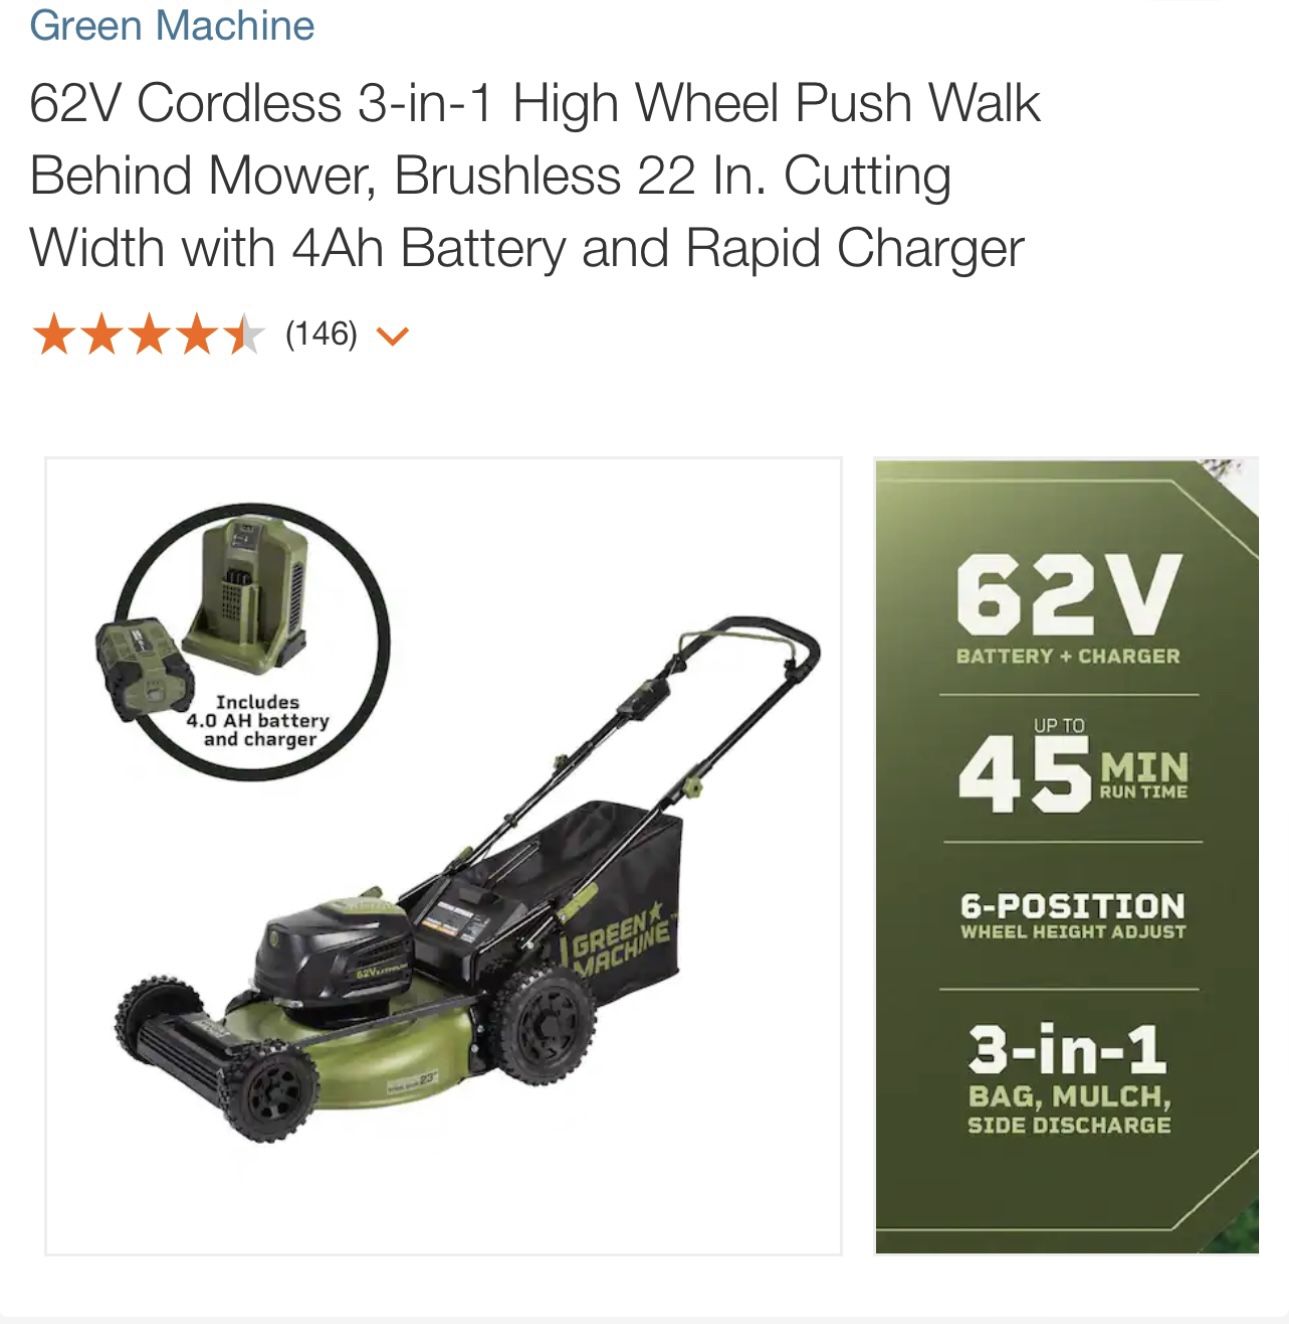 Reviews for Green Machine 62V Cordless 3-in-1 High Wheel Push Walk